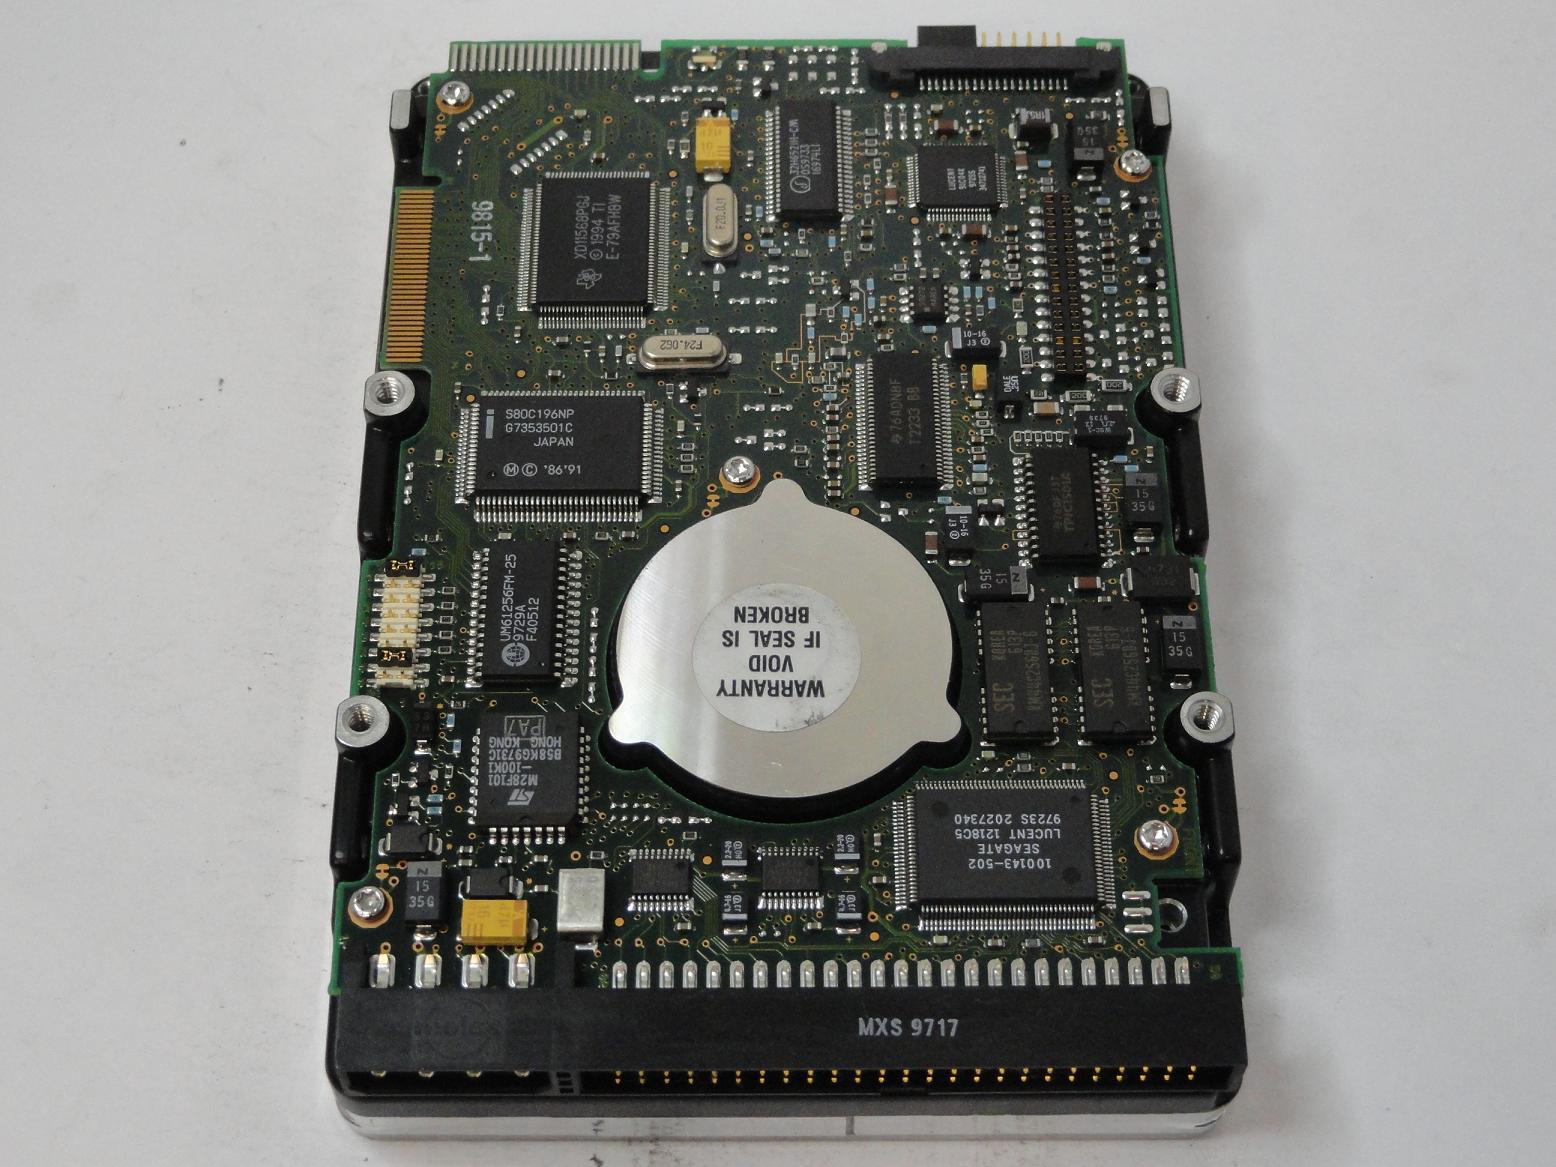 PR10465_9C4001-057_Seagate 1GB SCSI 50Pin 5400rpm 3.5in HDD - Image2